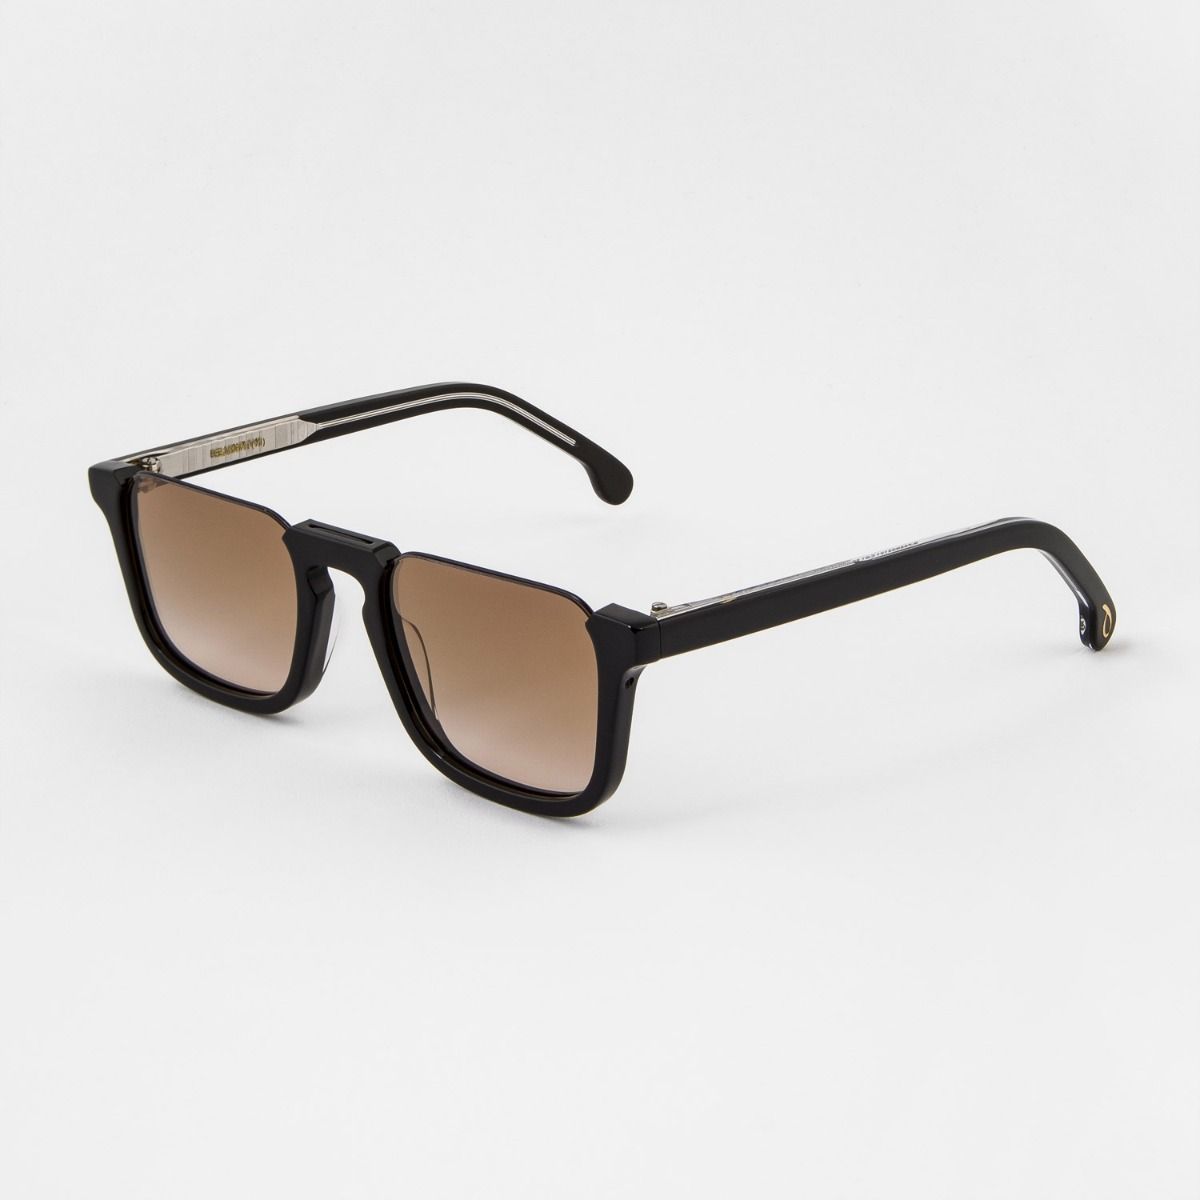 Paul Smith Belmont Square Sunglasses